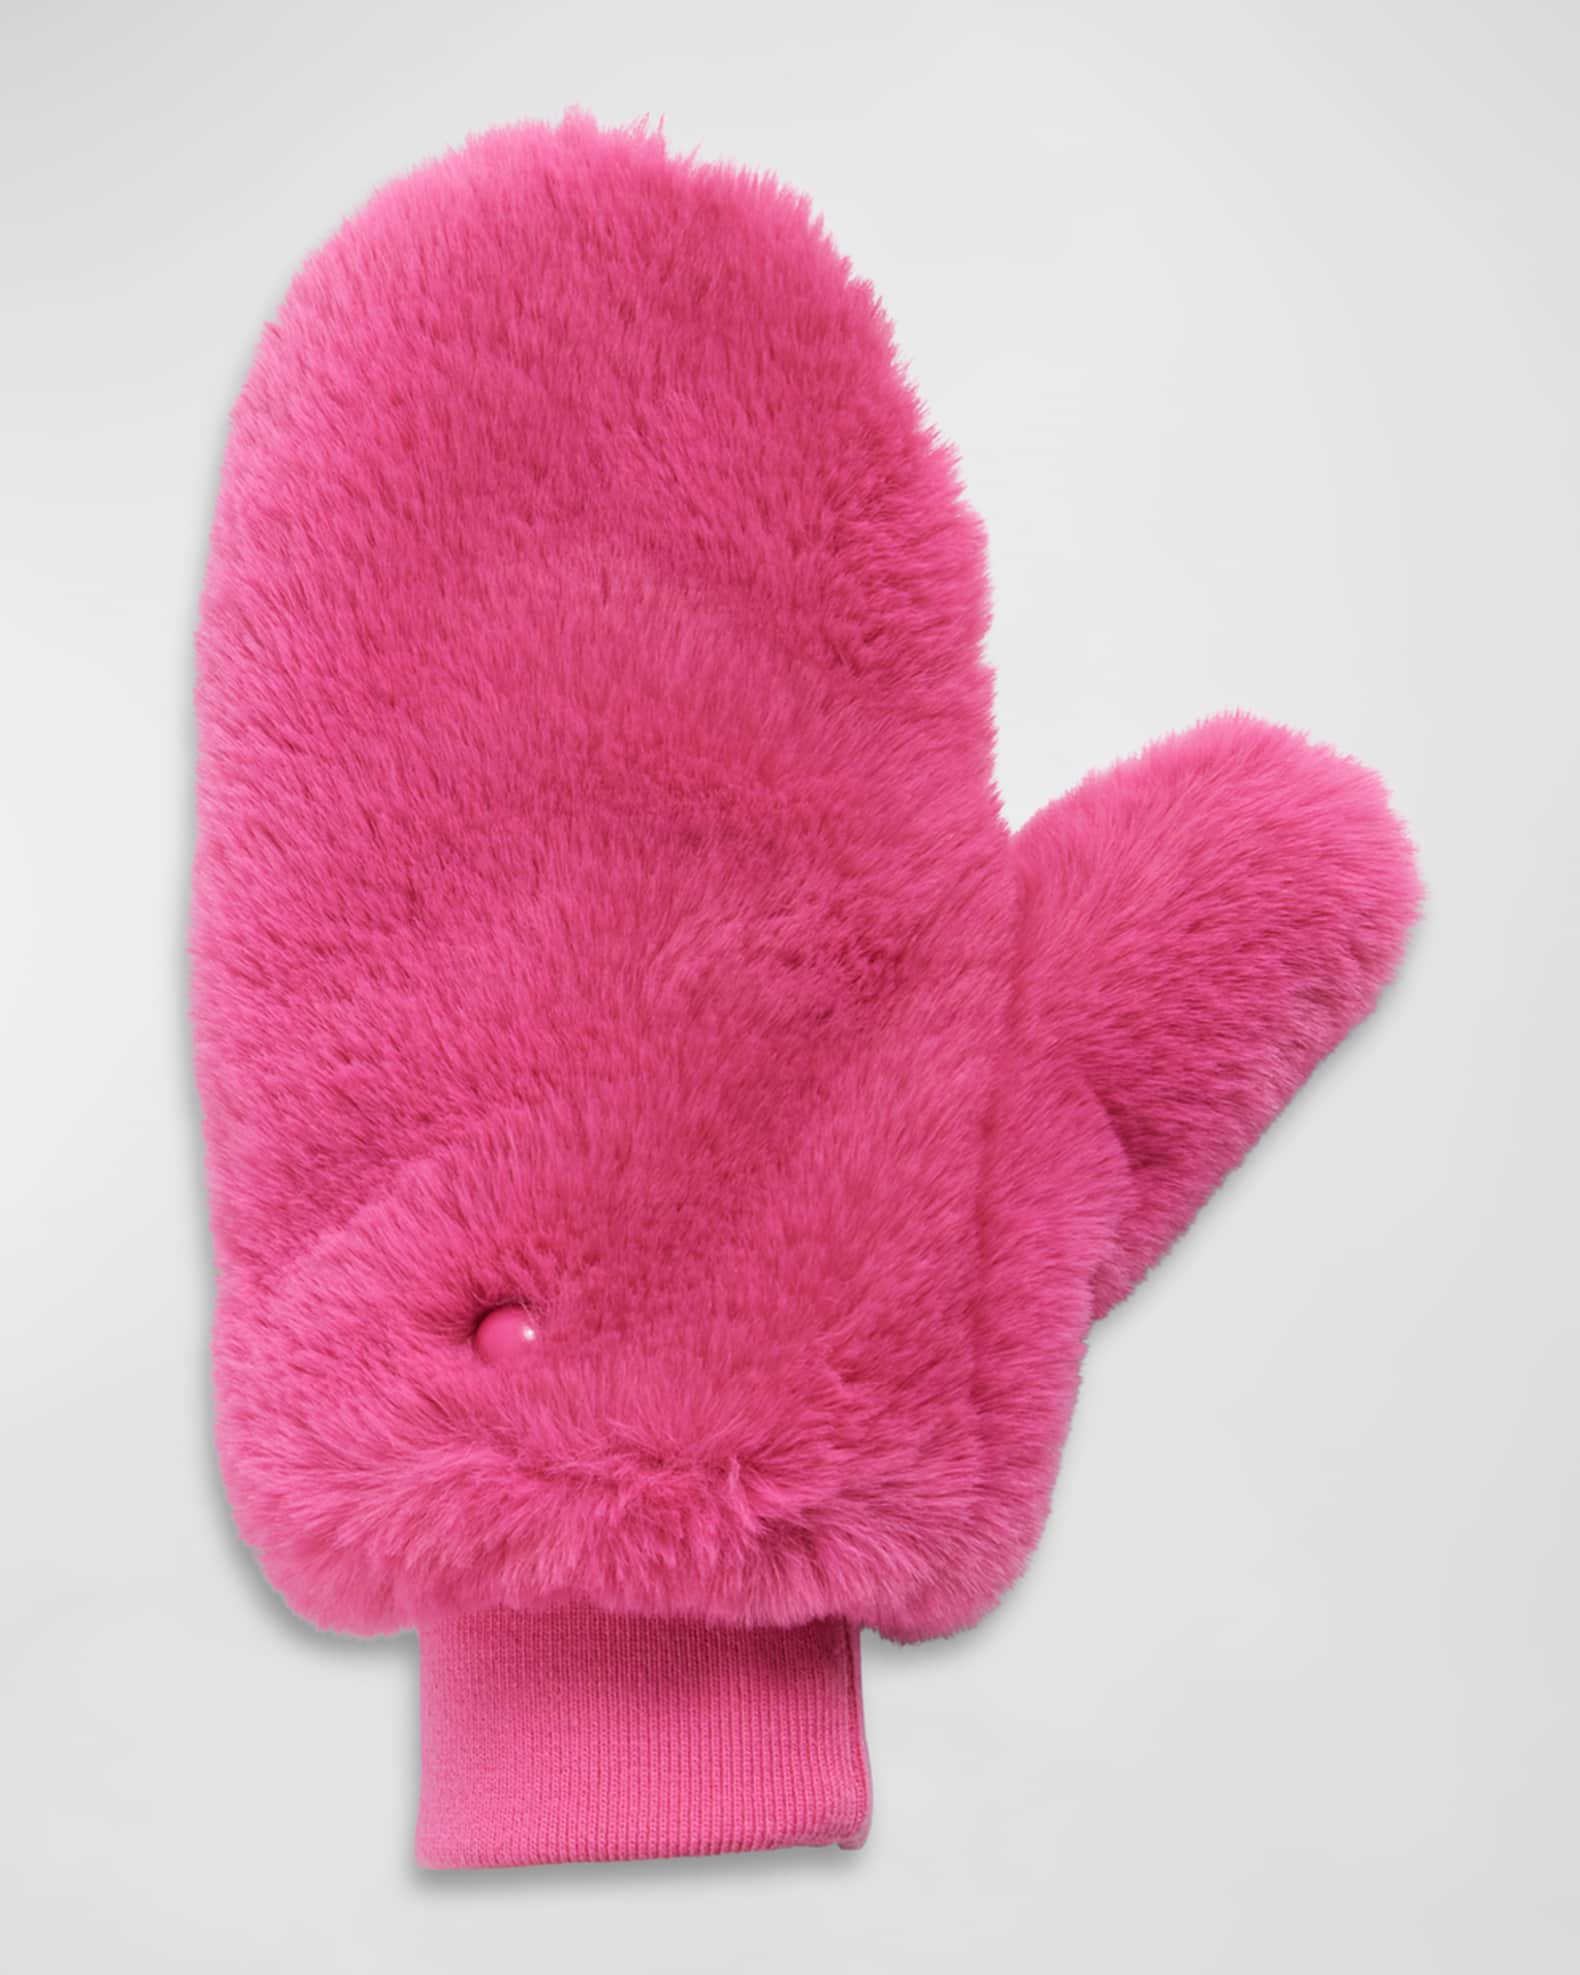 Fabulous Furs Hot Pink Faux Fur Slippers